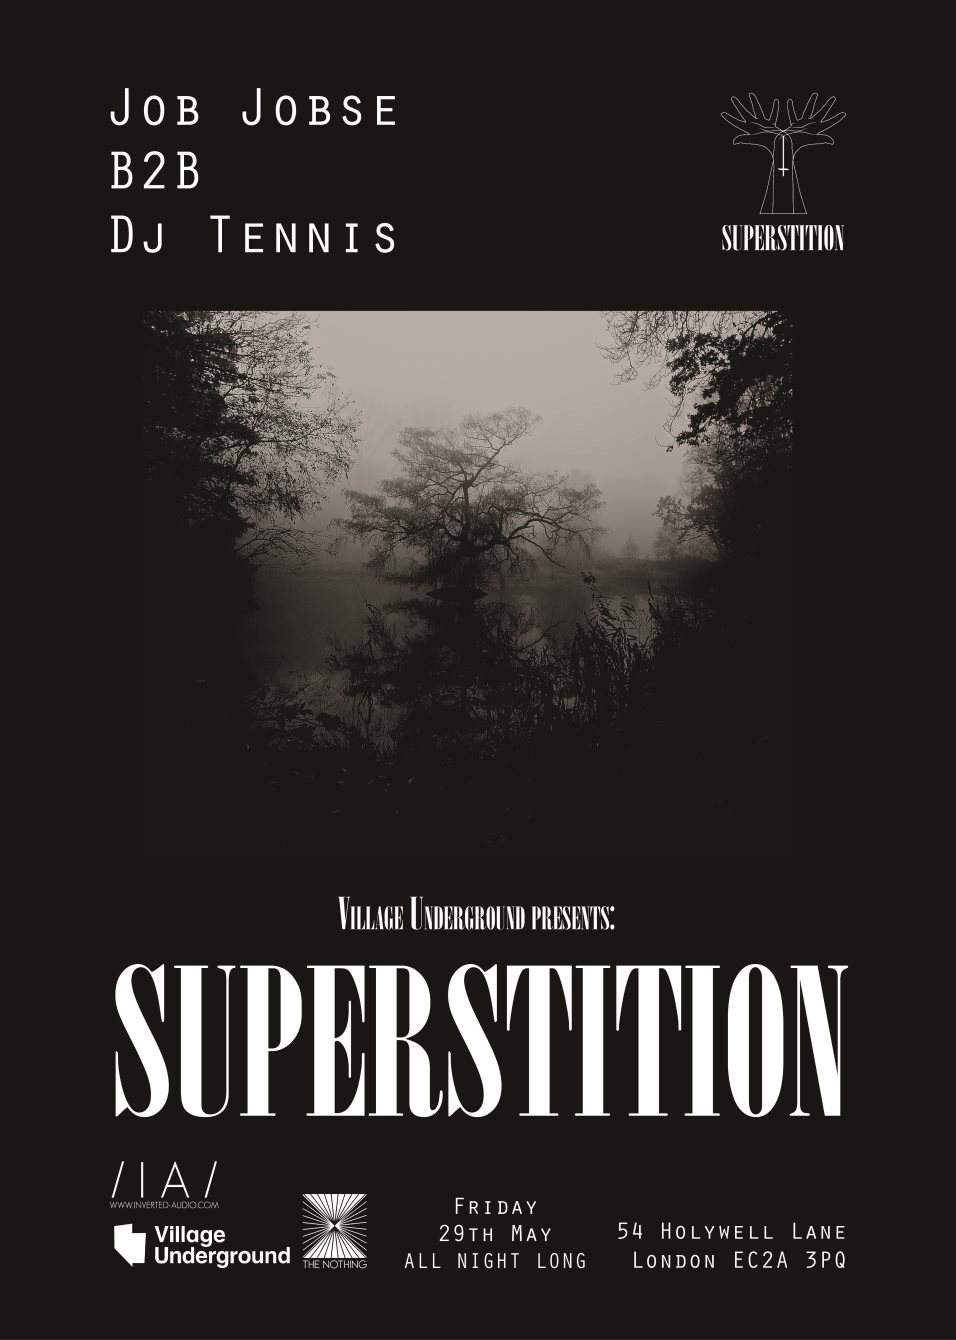 Superstition presents DJ Tennis B2B Job Jobse All Night Long - Página trasera